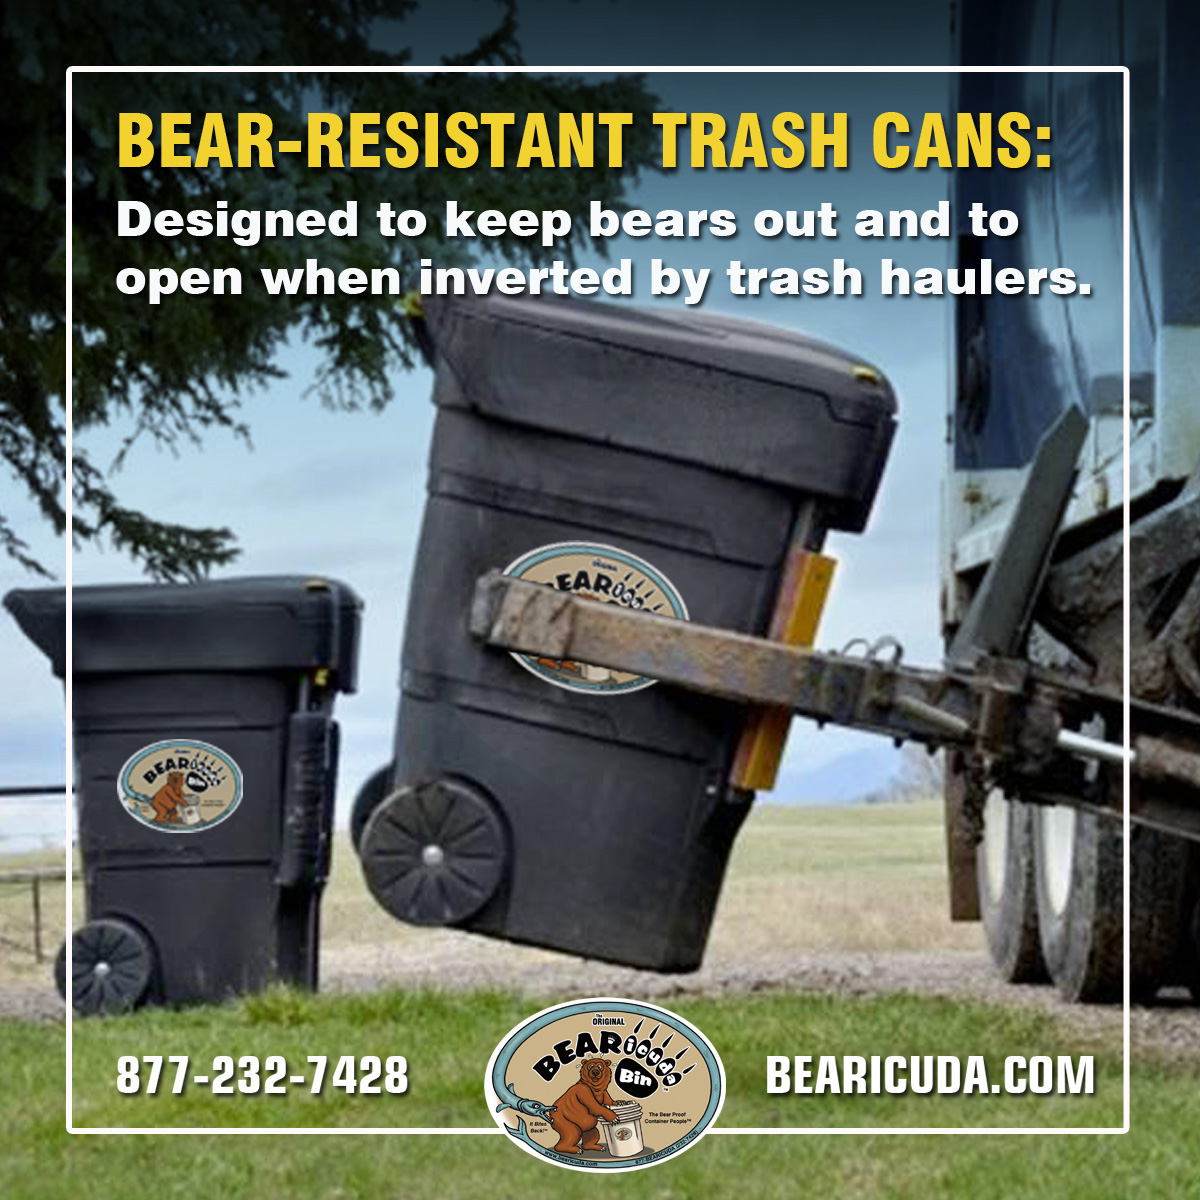 Stealth bearproof trash can garbage truck